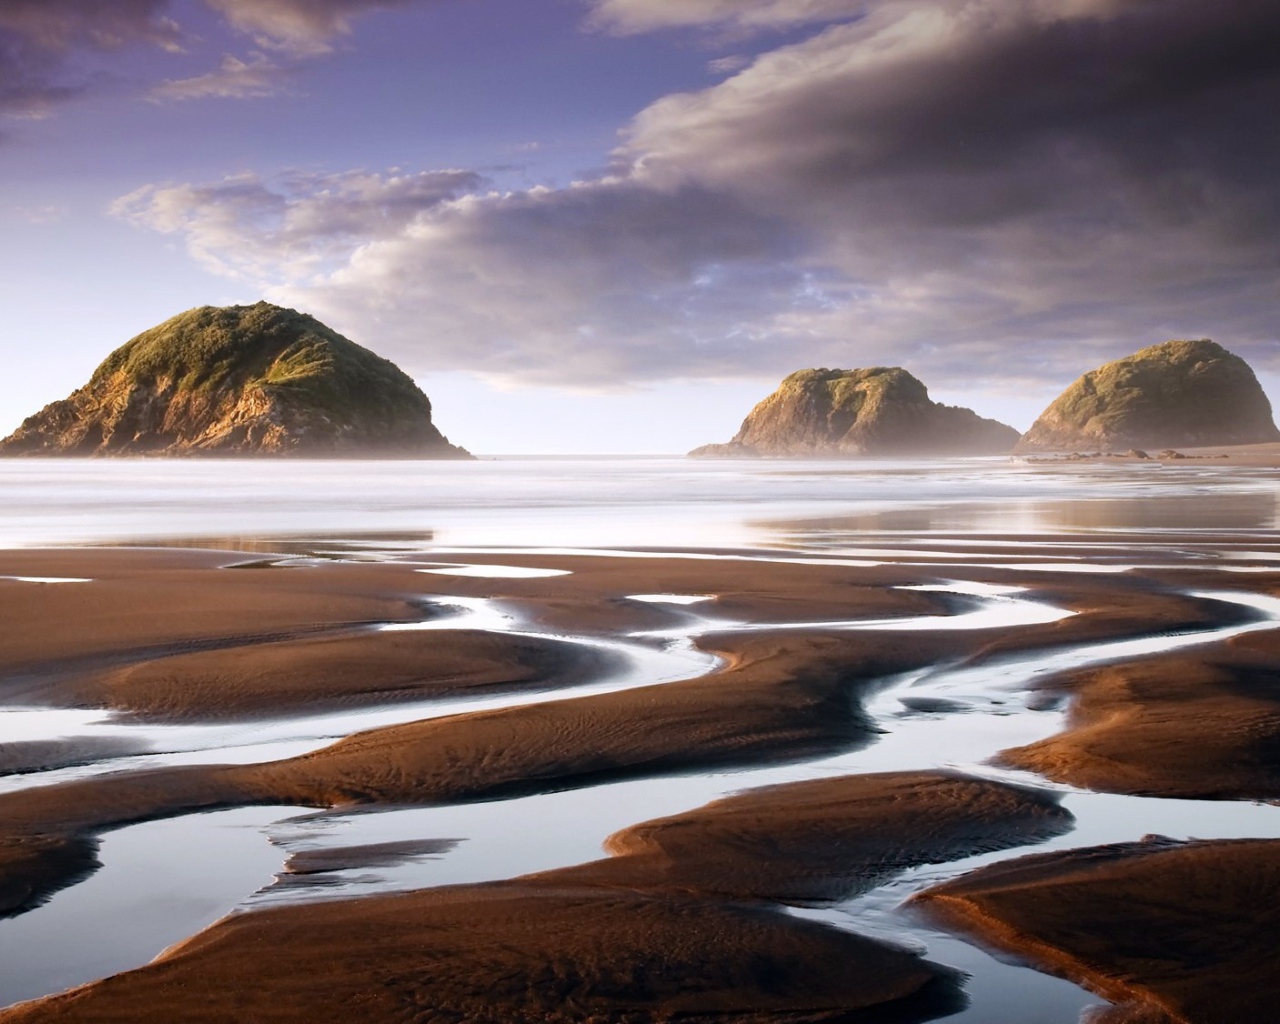 Fantastic landscape in New Zealand